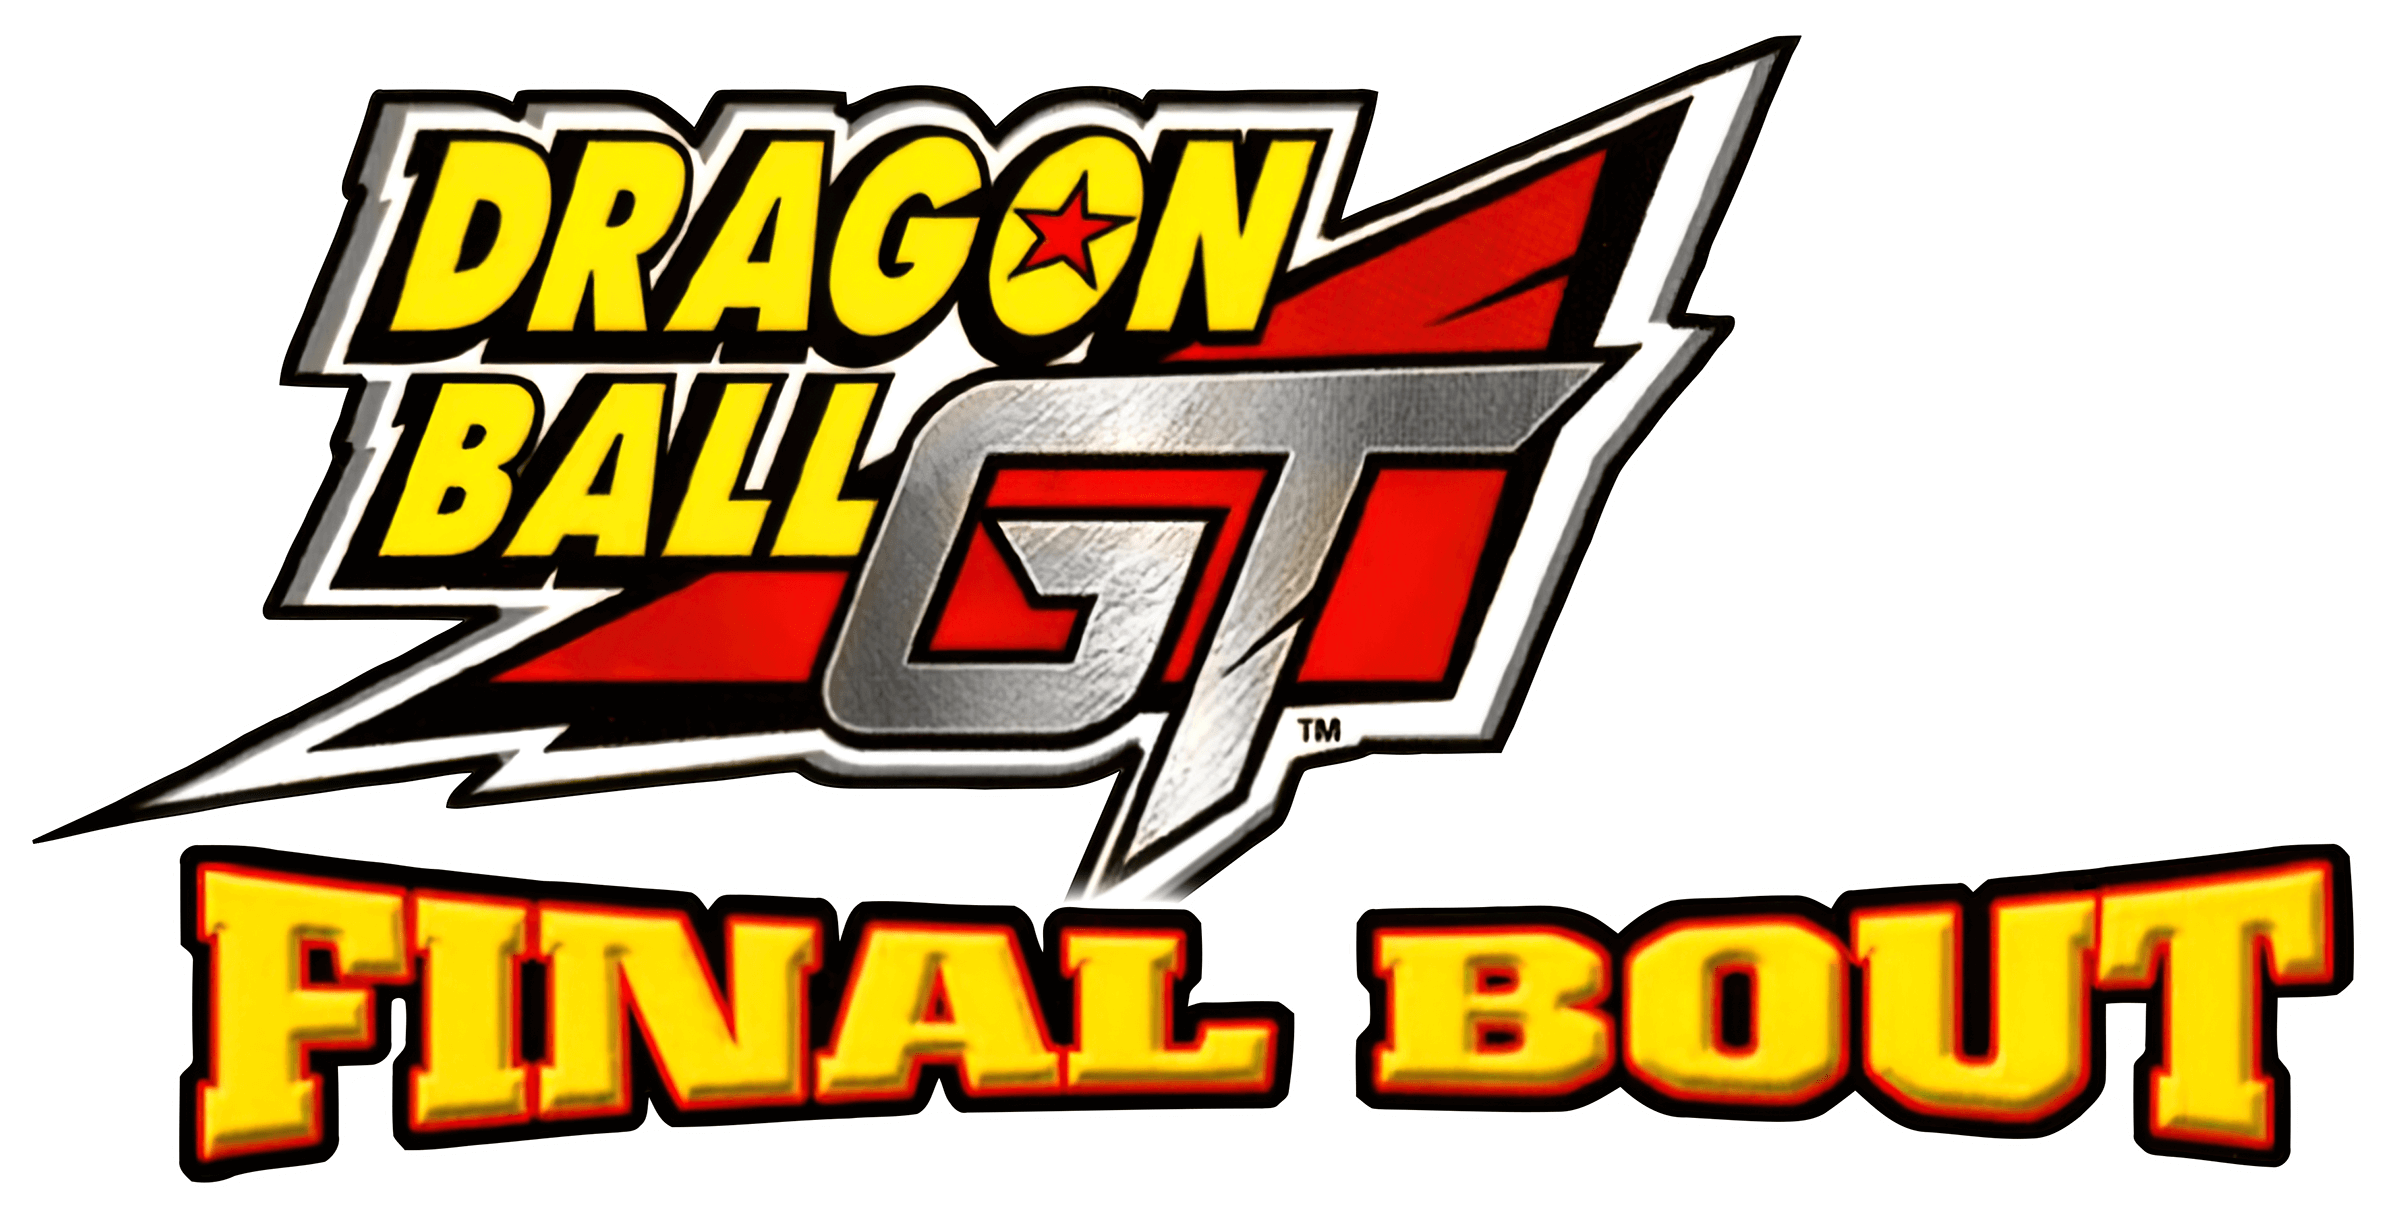 Dragon Ball GT Final Bout